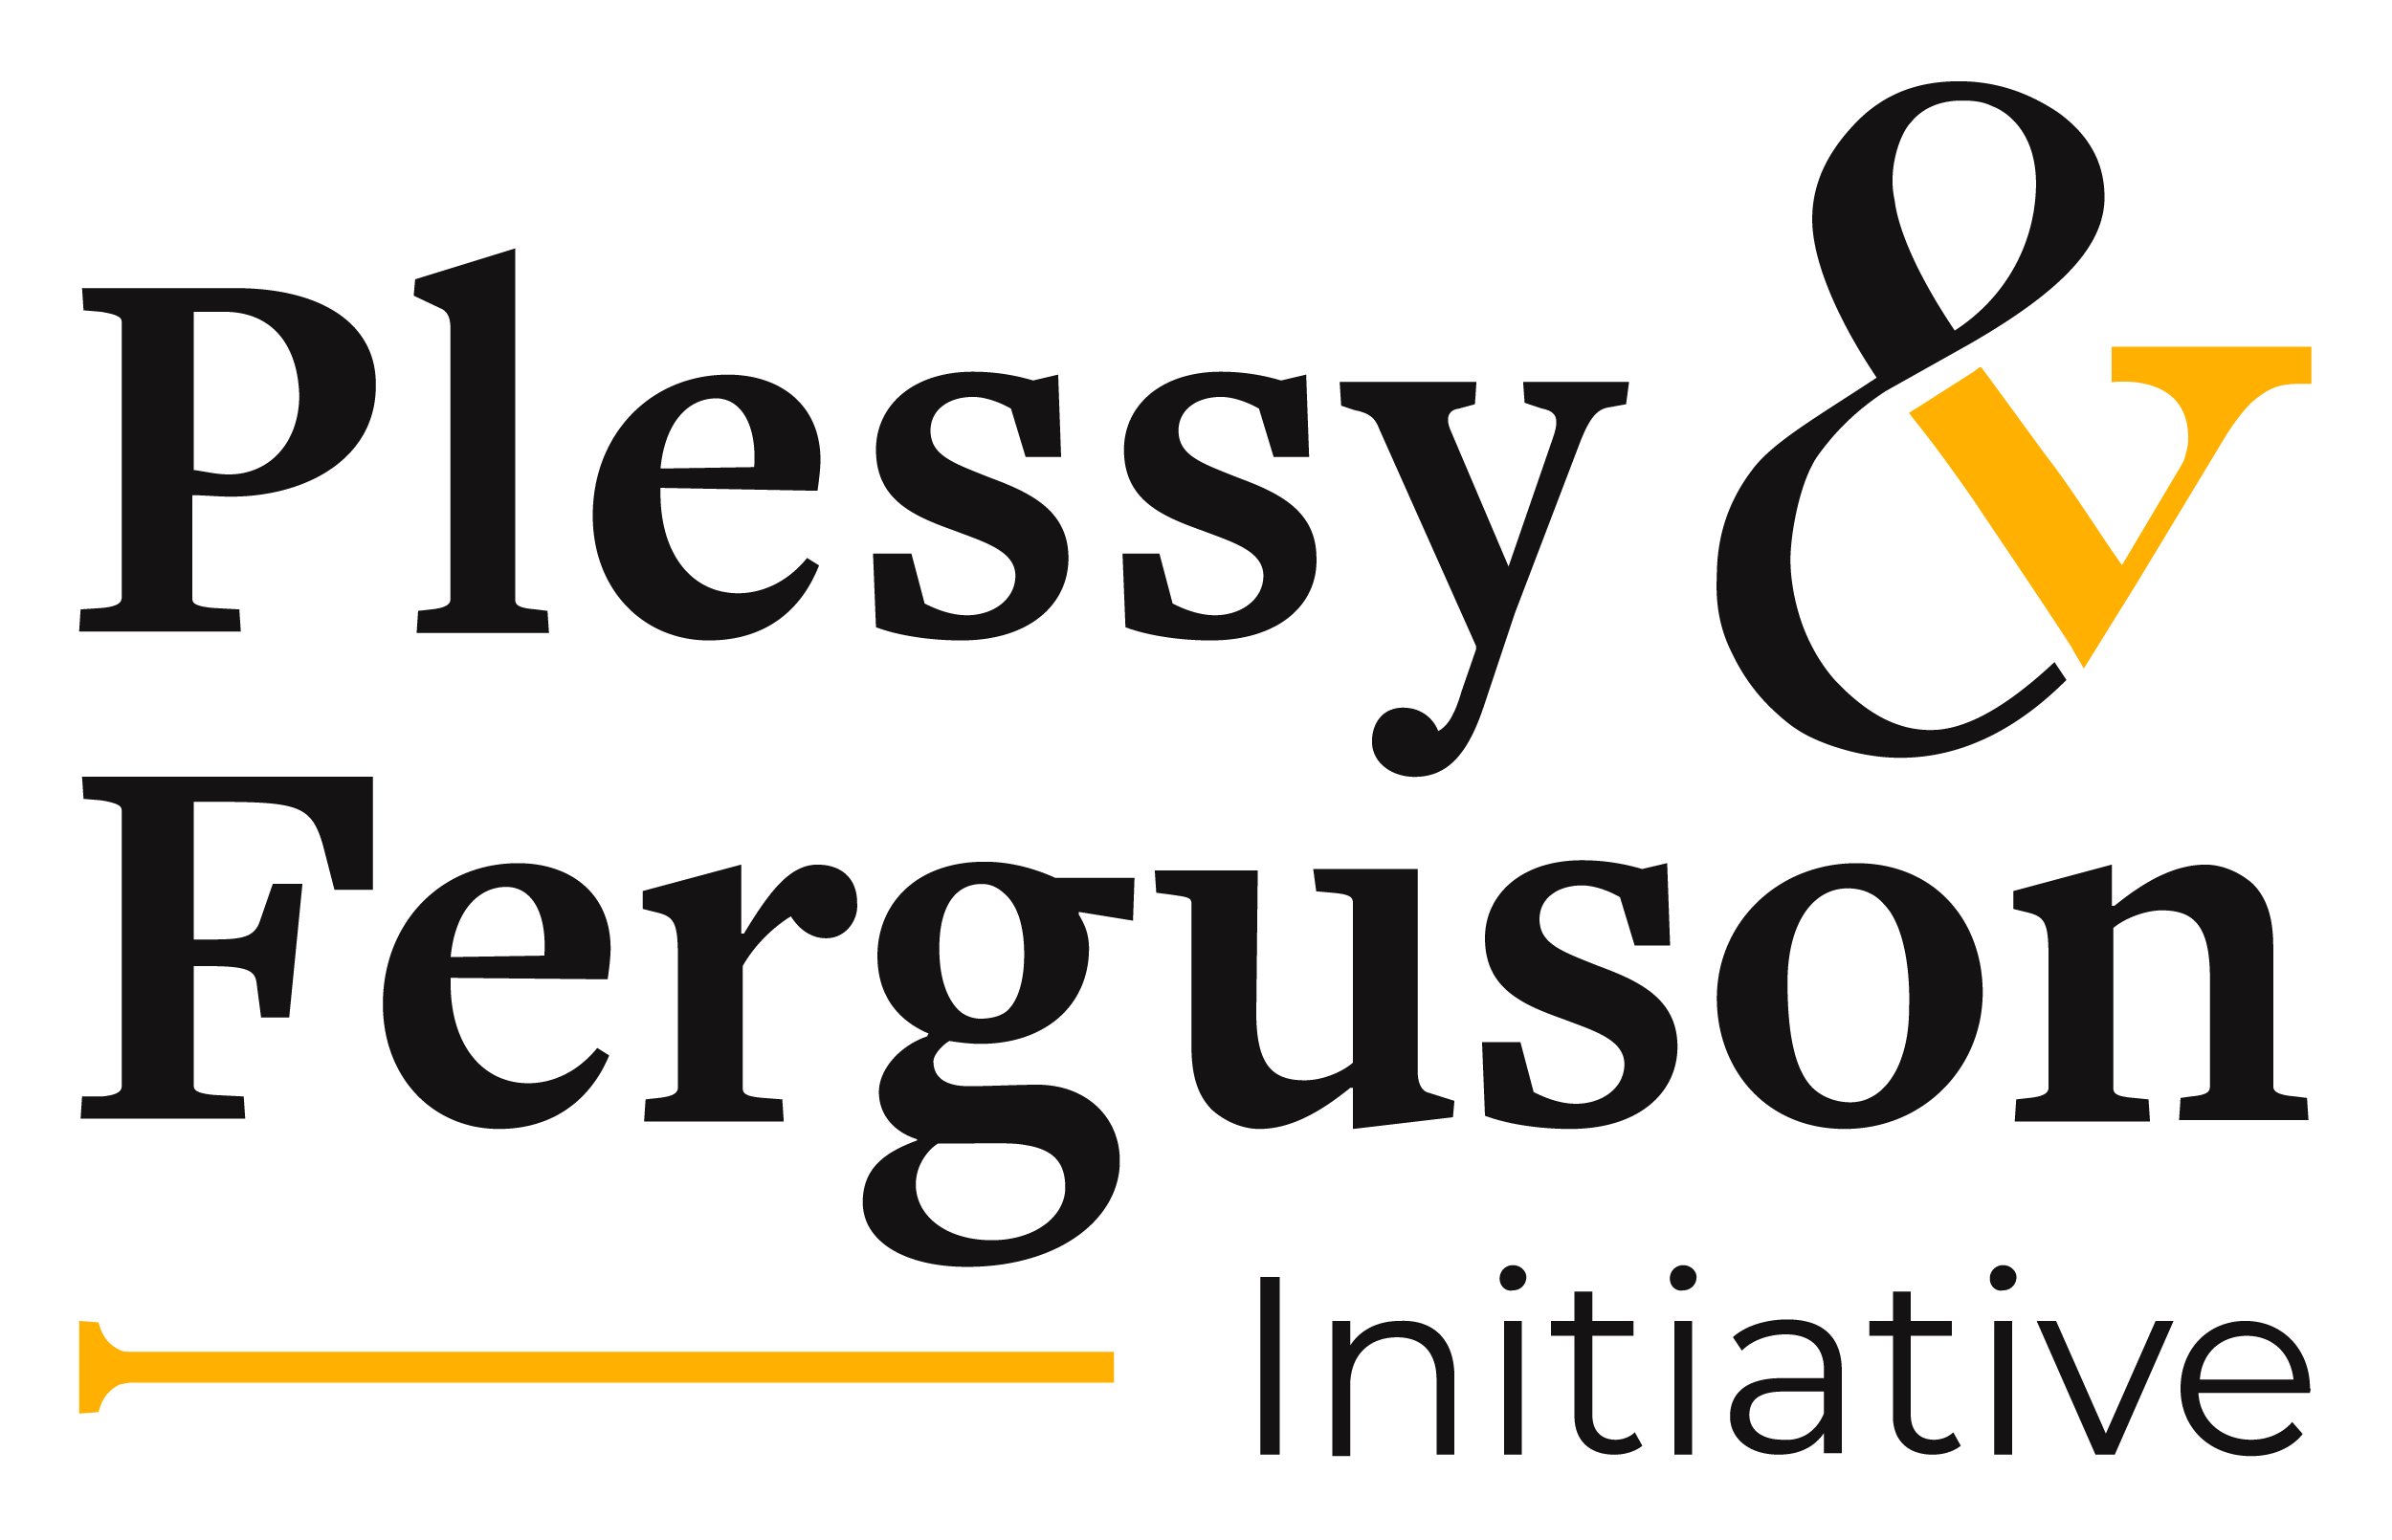 The Plessy &amp; Ferguson Initiative